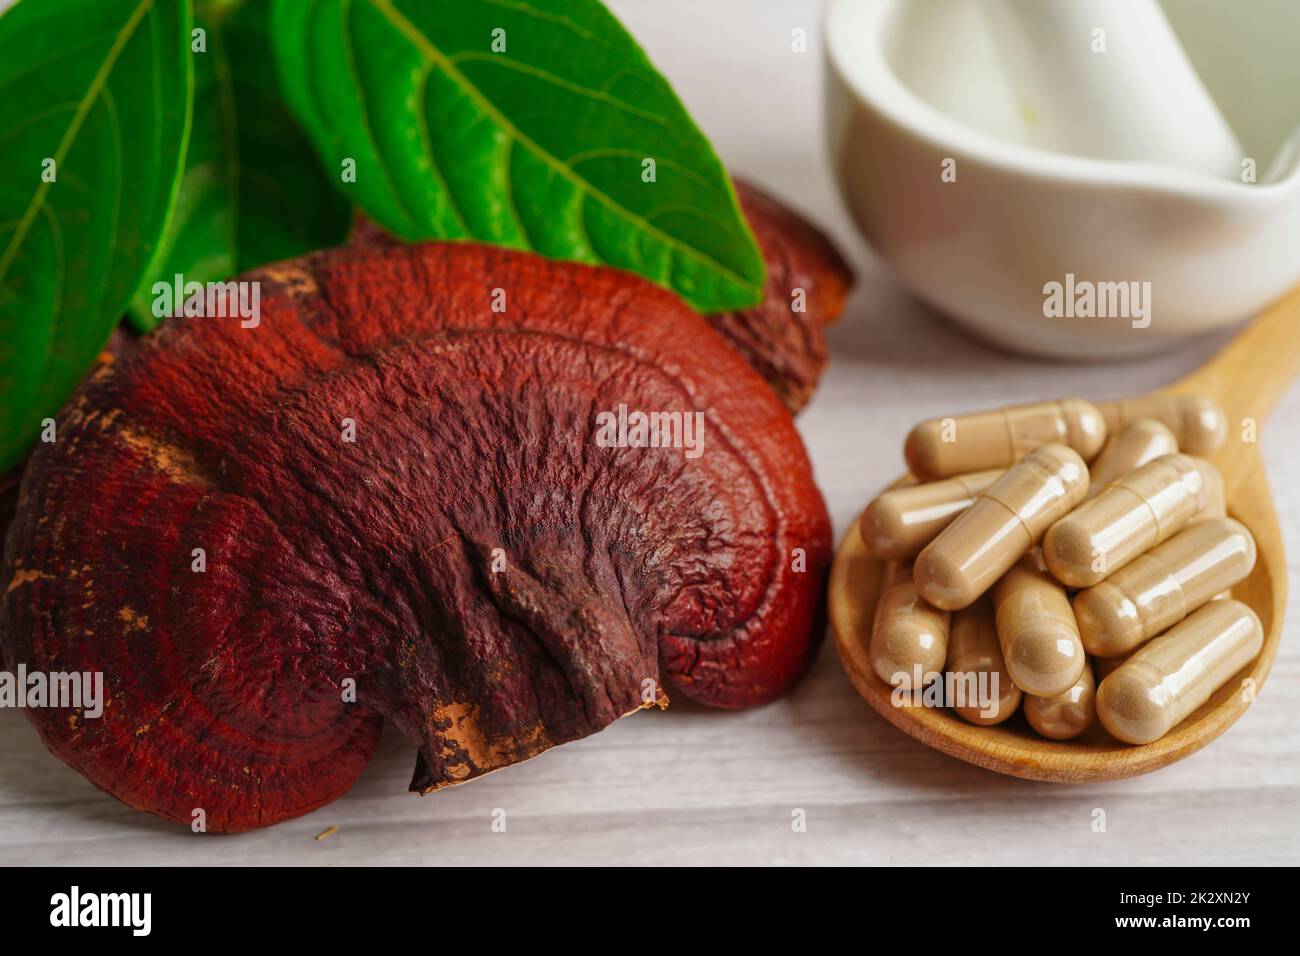 Lingzhi o Reishi funghi con capsule, alimenti biologici naturali sani. Foto Stock